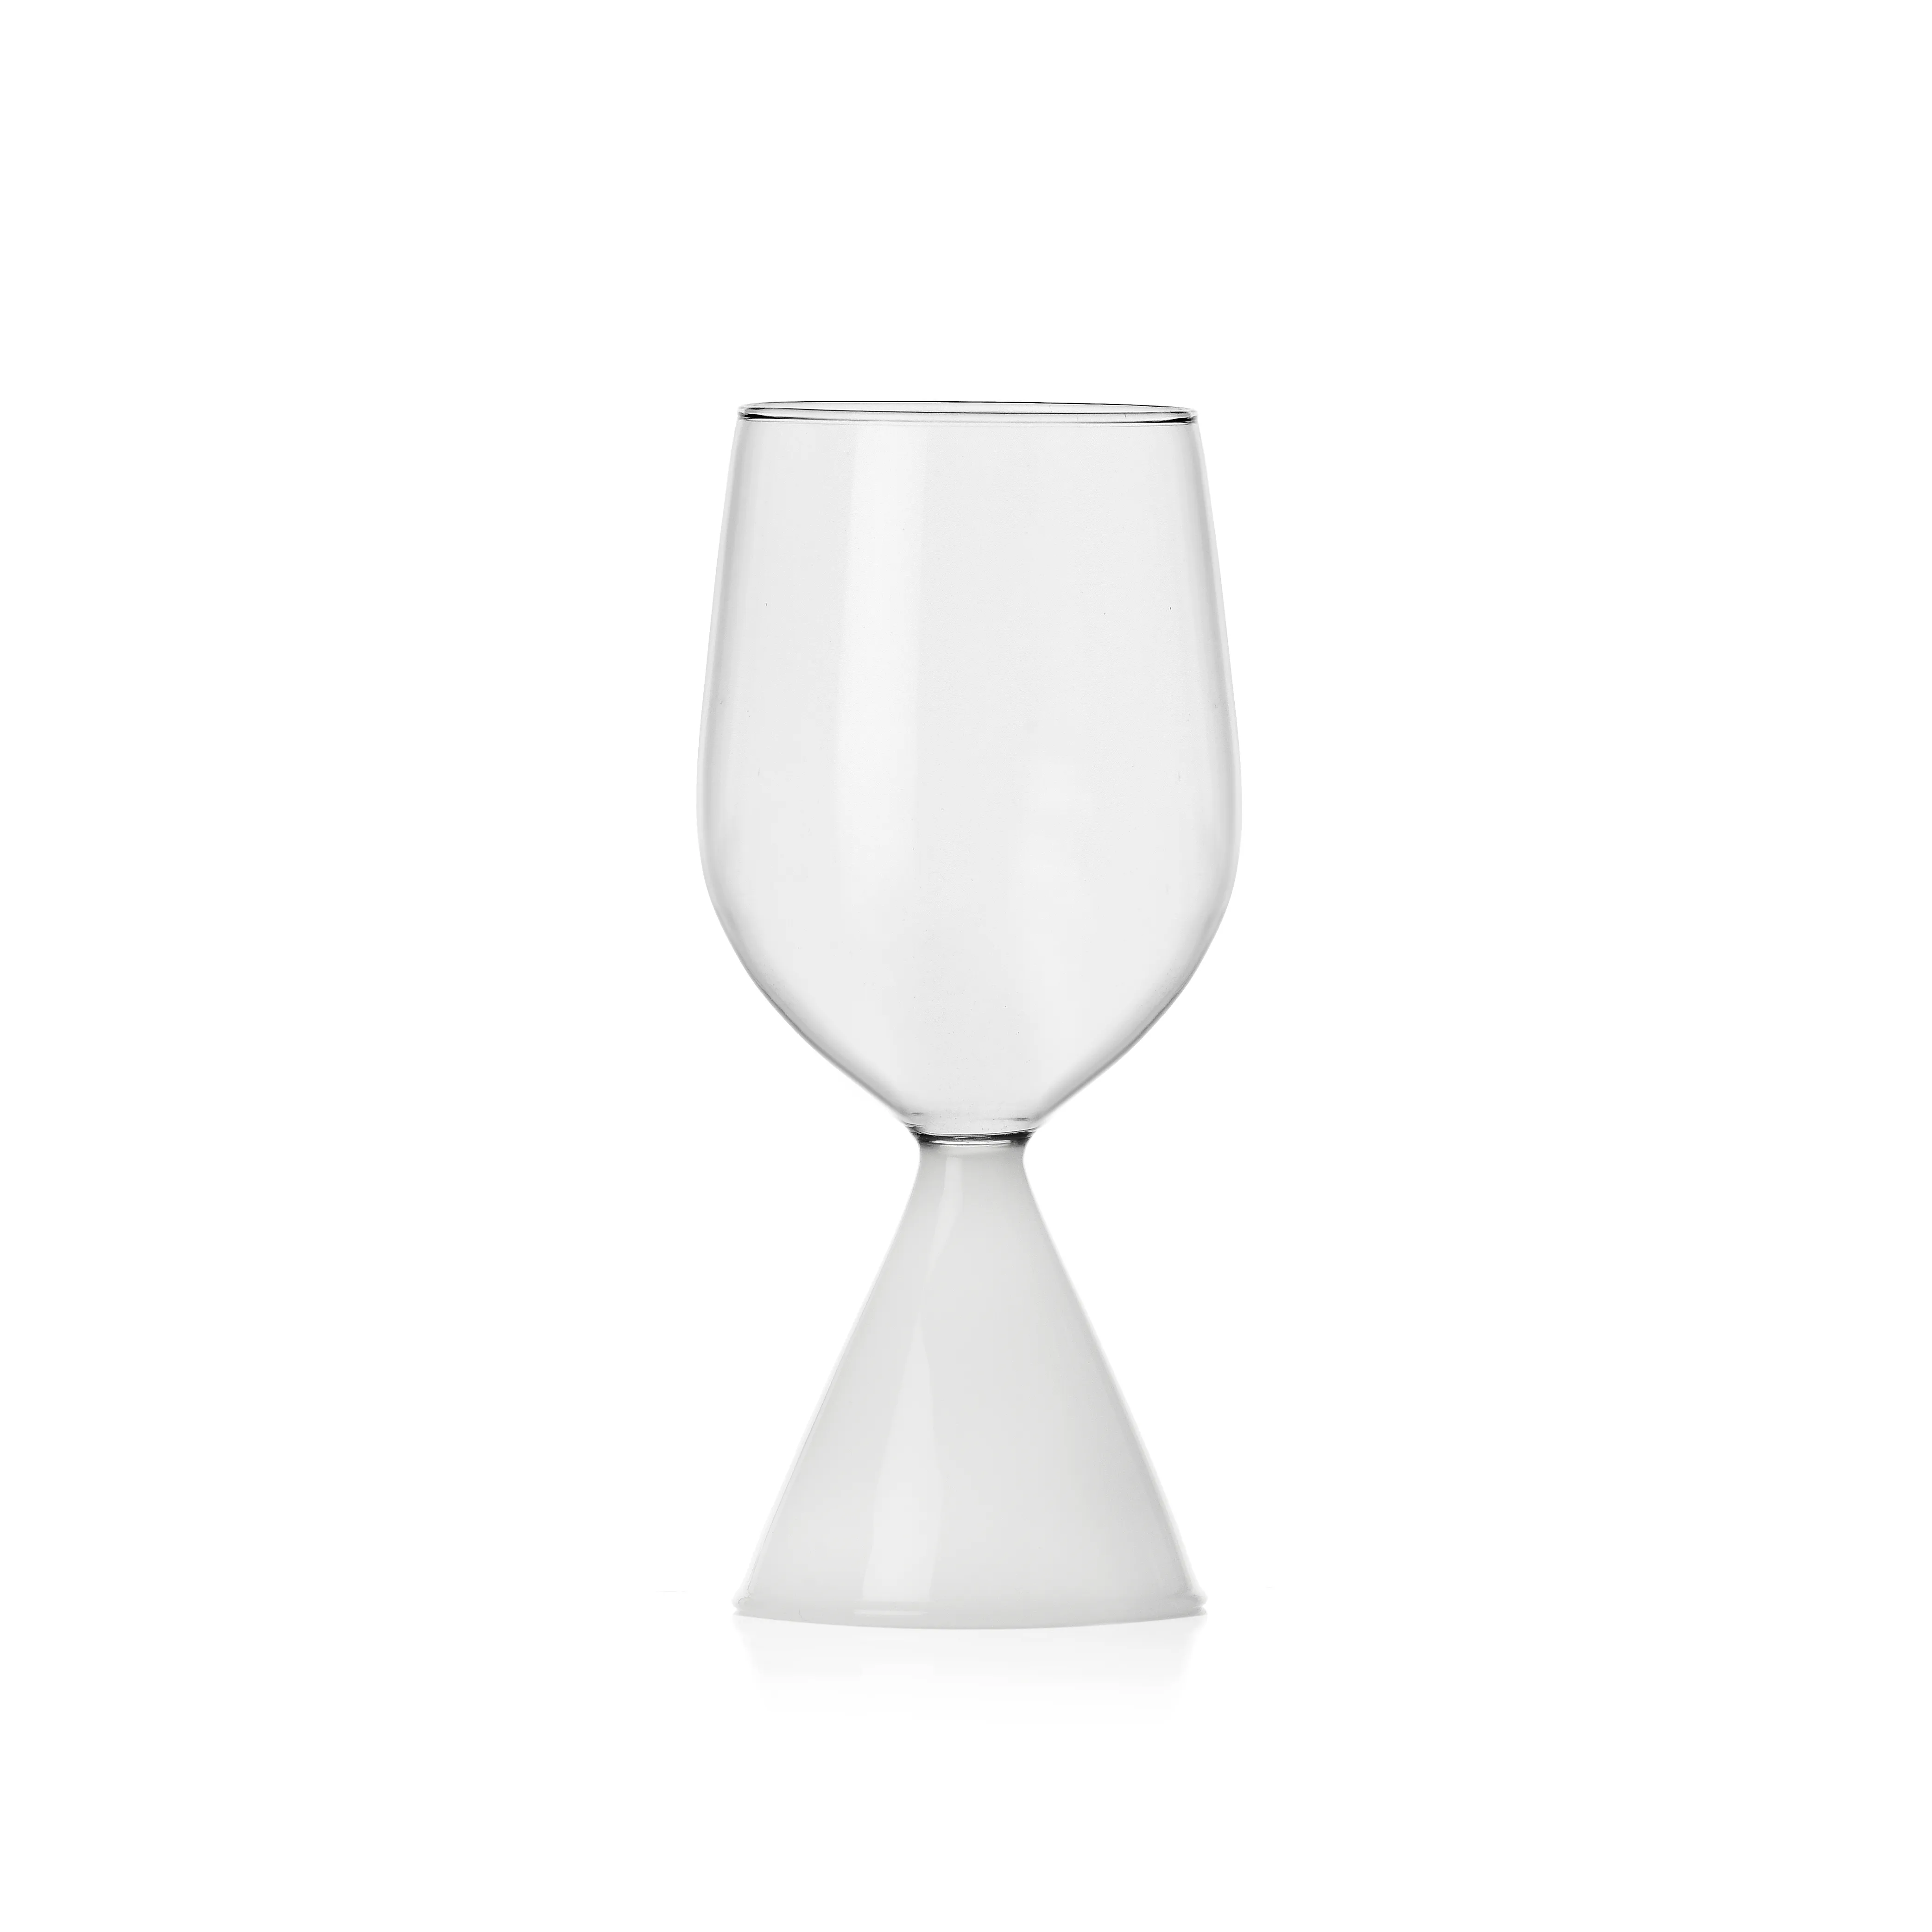 Ichendorf White Wine Glass Collection Tutu Matte White